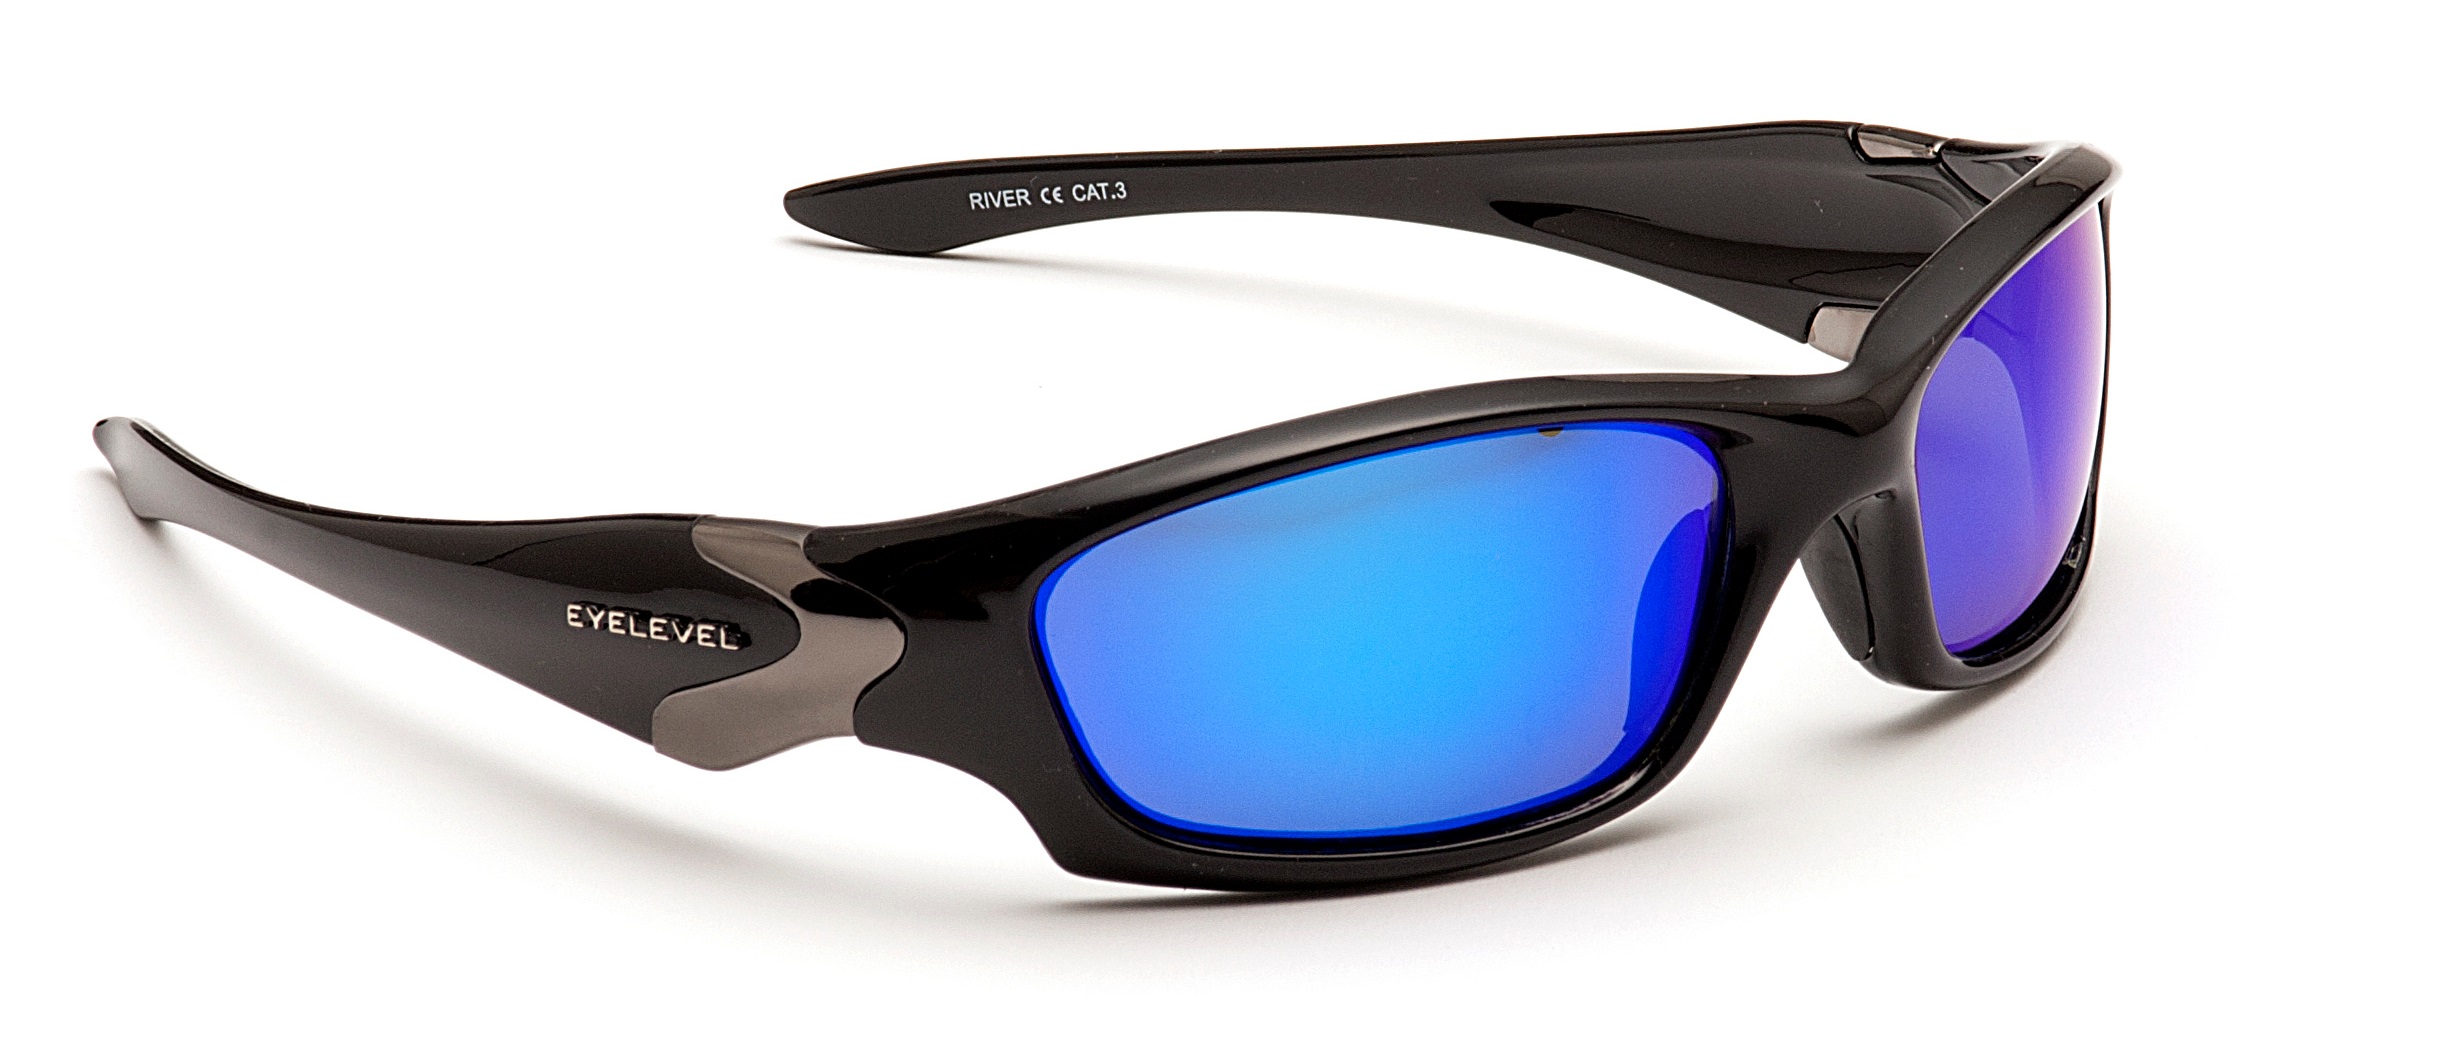 river sports sunglasses blues